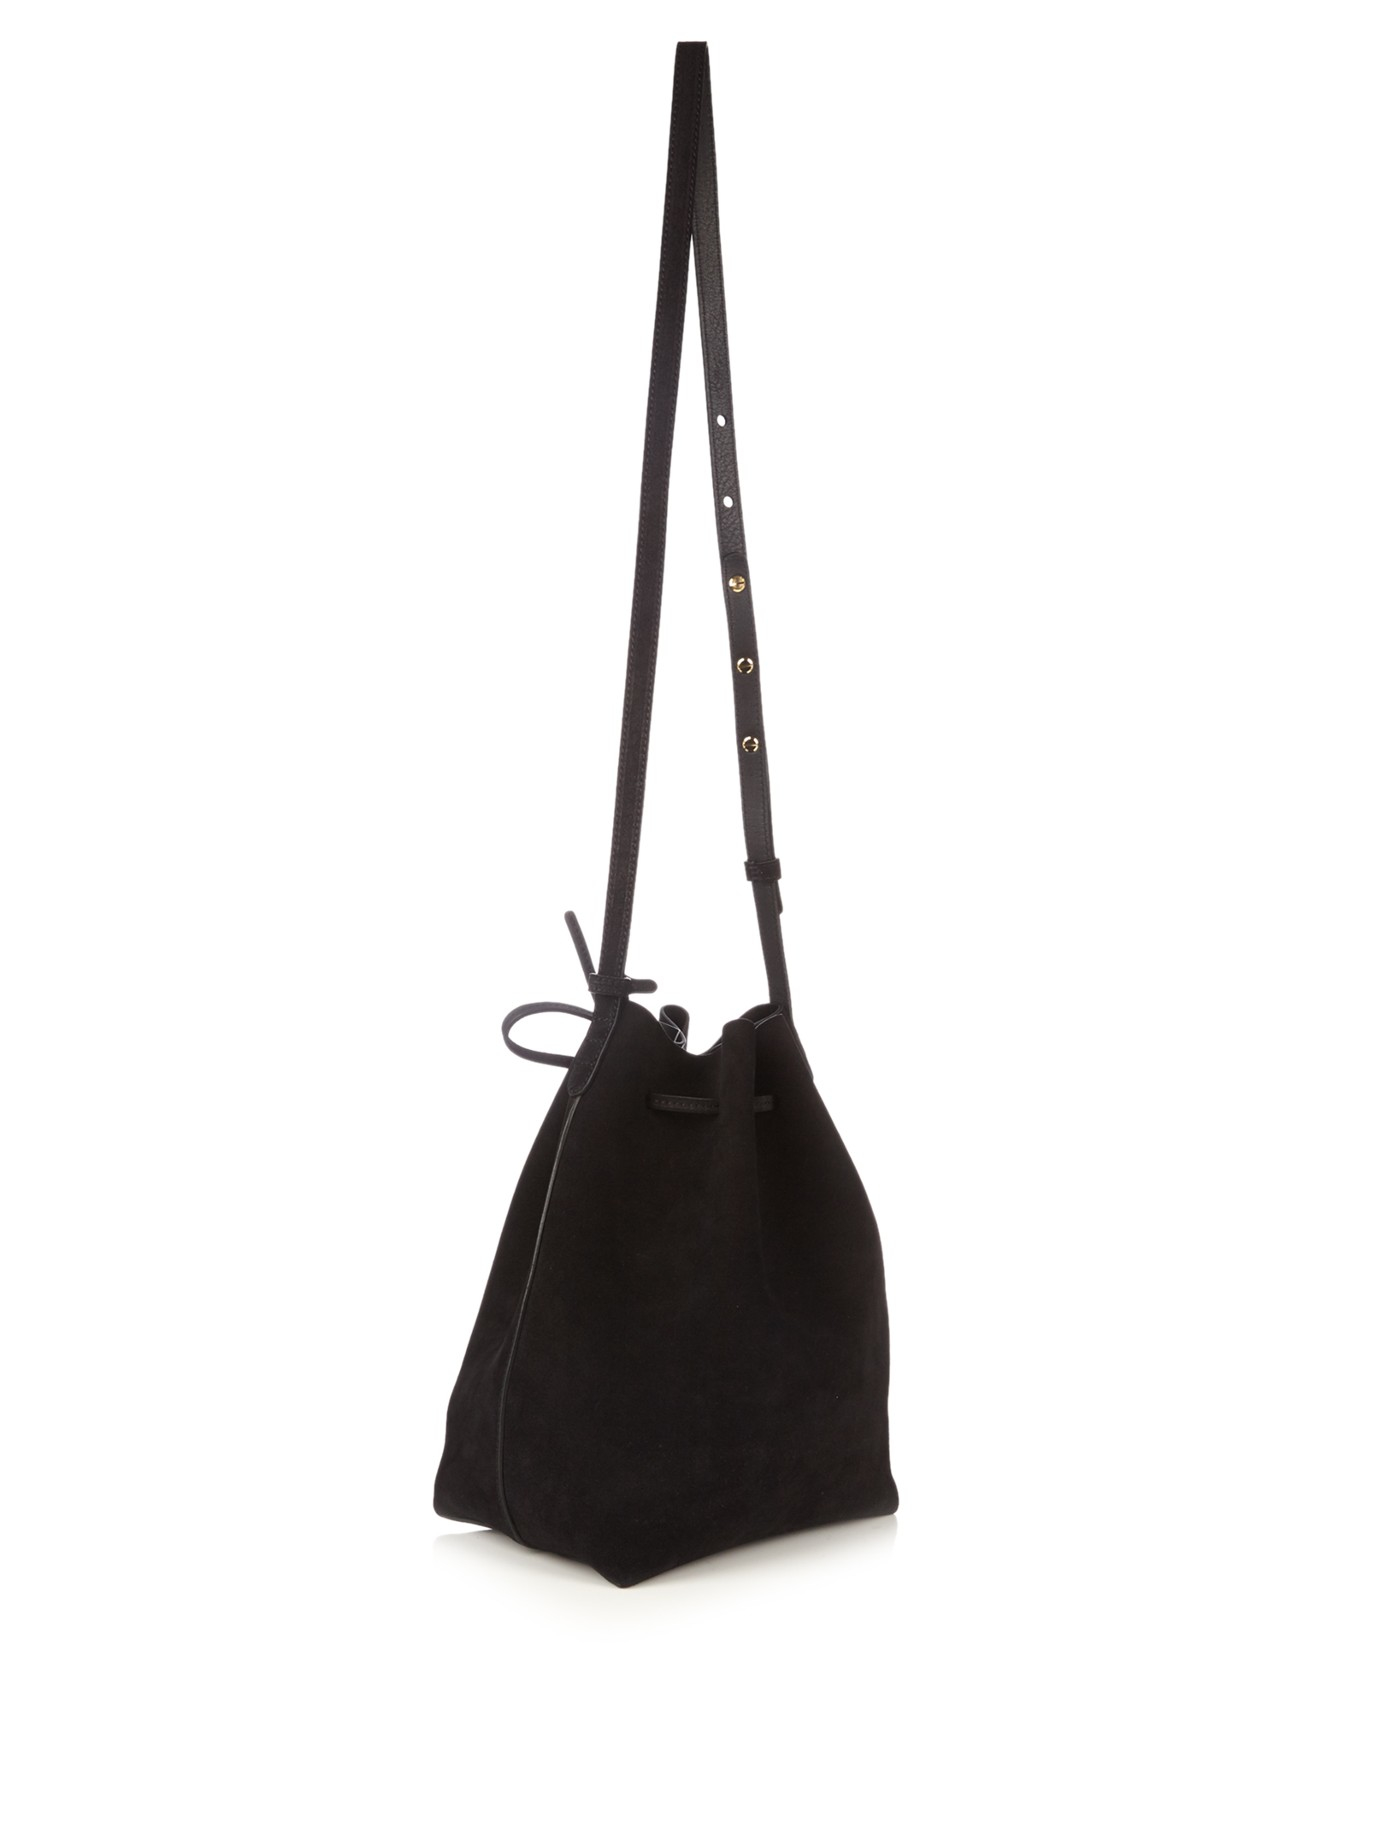 Lyst - Mansur Gavriel Leather-Lined Suede Bucket Bag in Black